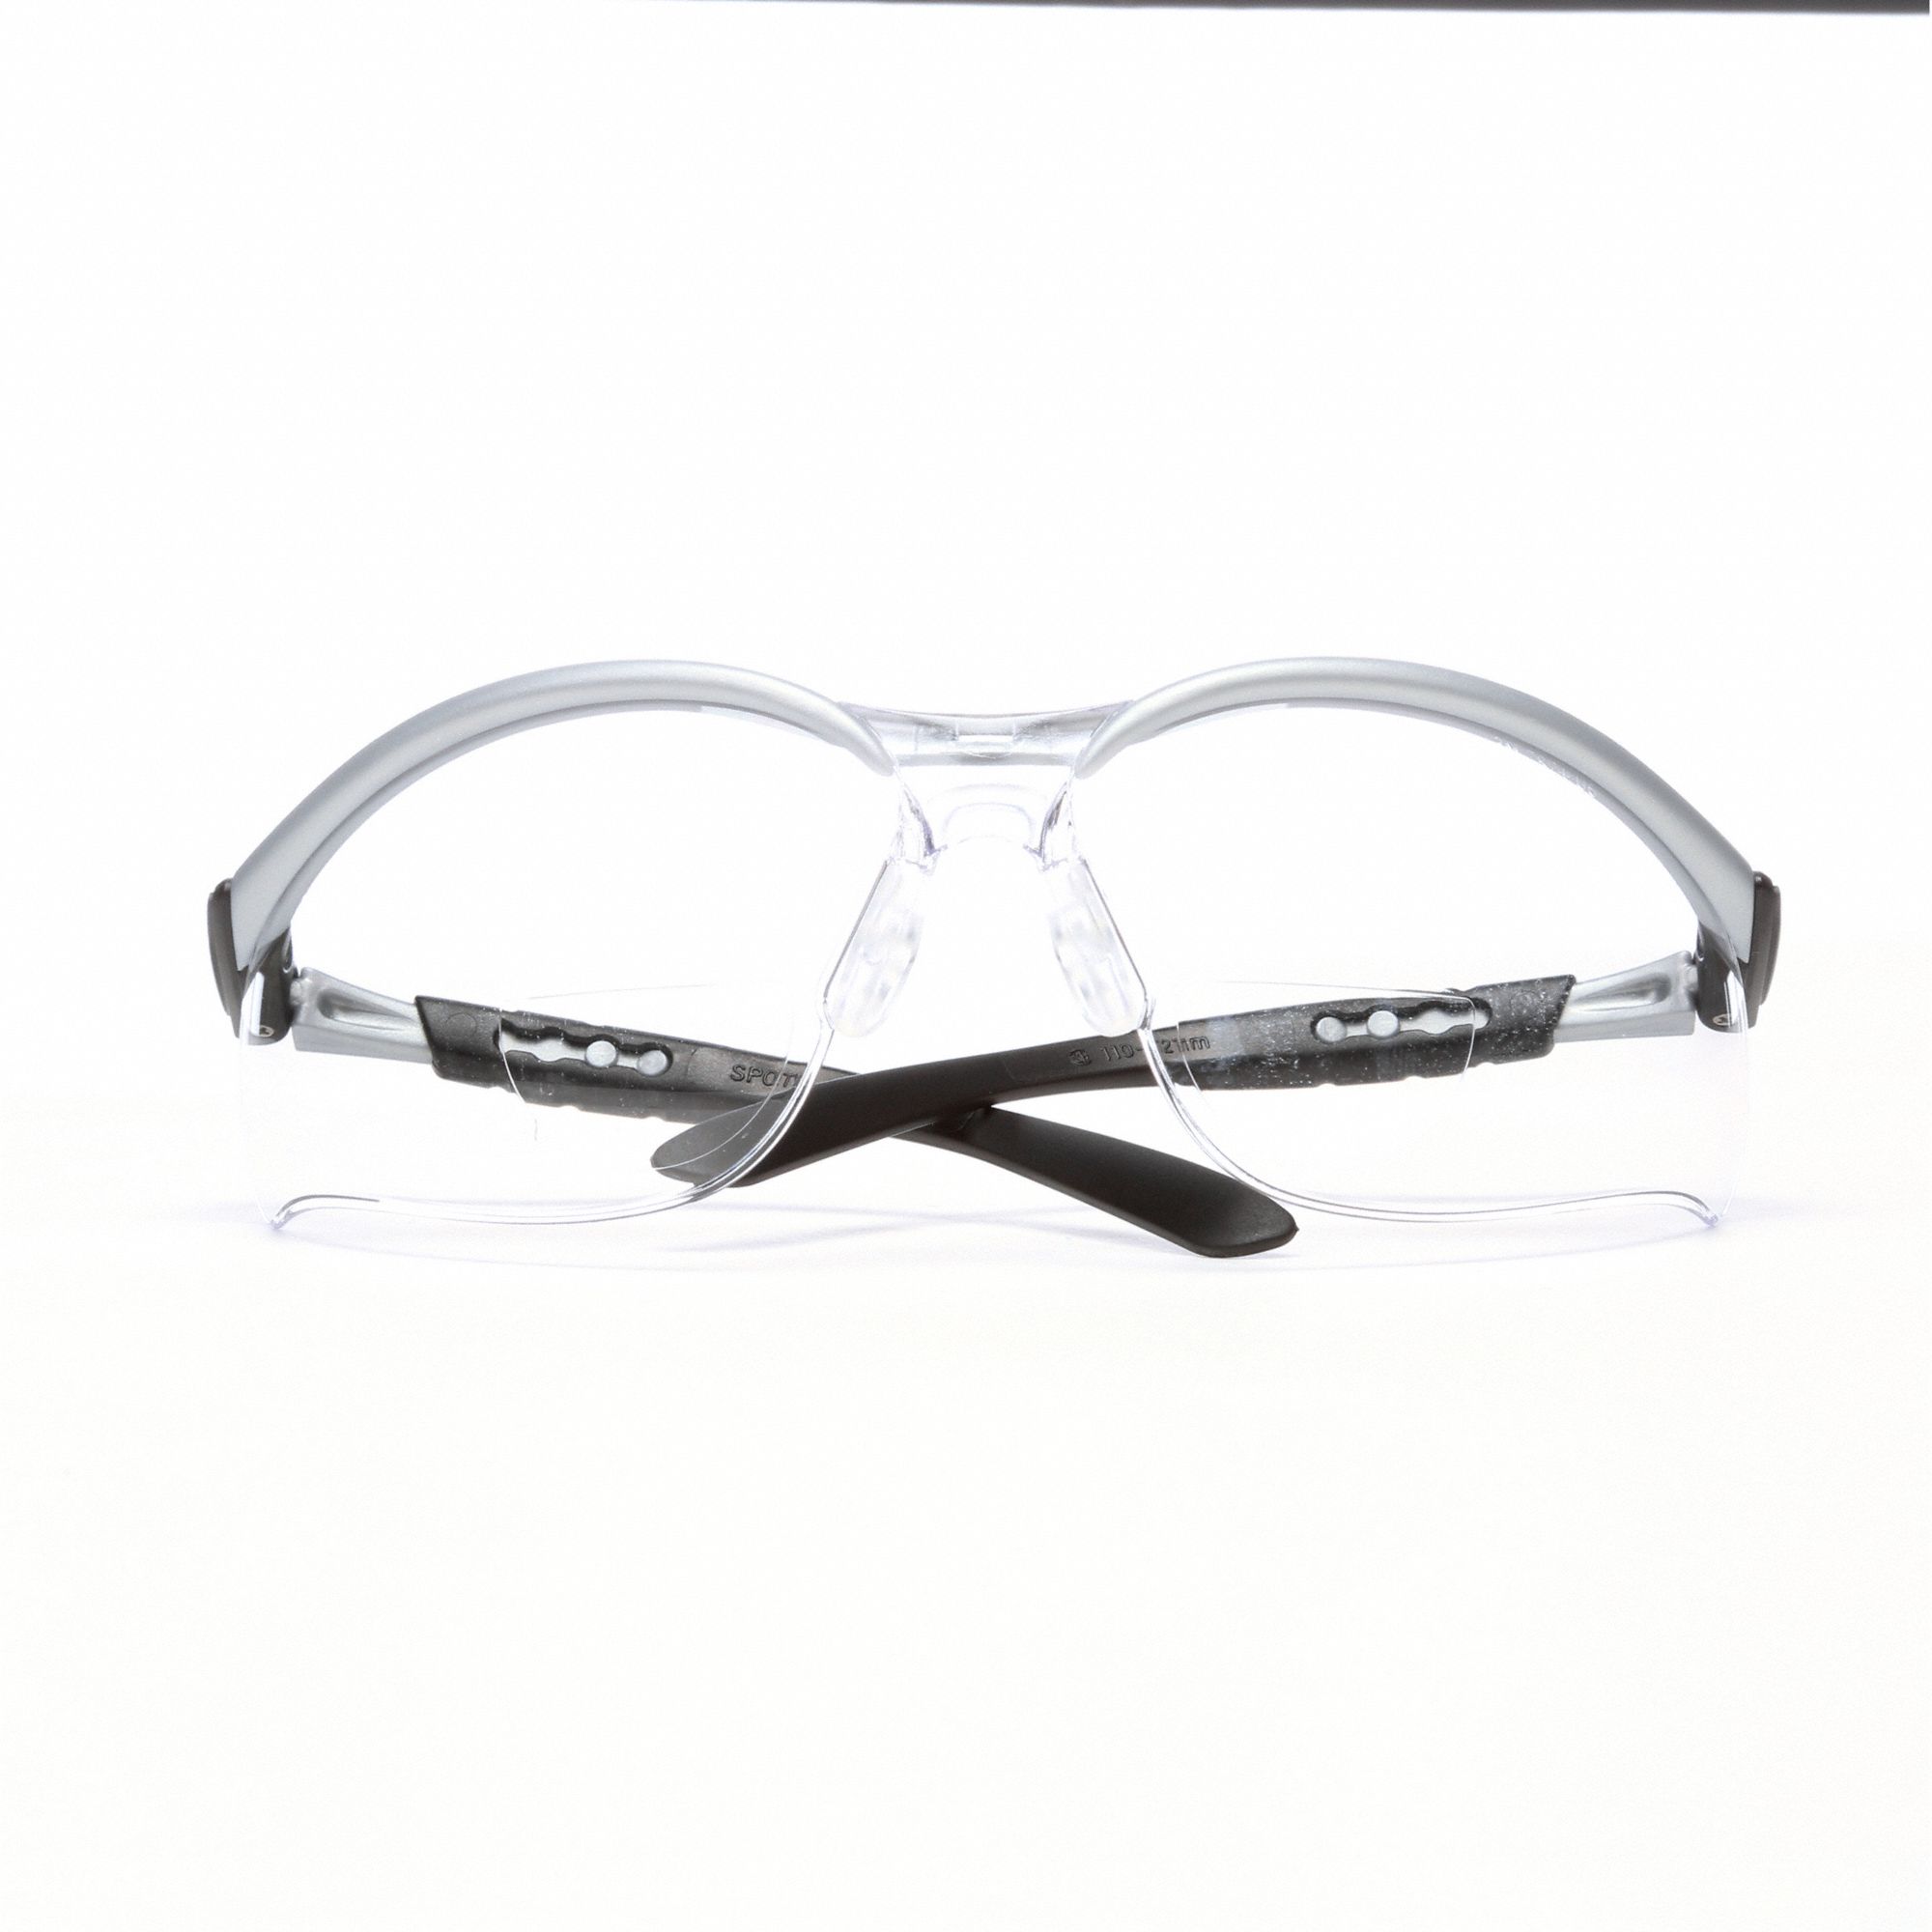 3m Bifocal Safety Reading Glasses Anti Fog No Foam Lining Wraparound Frame Half Frame 1 50